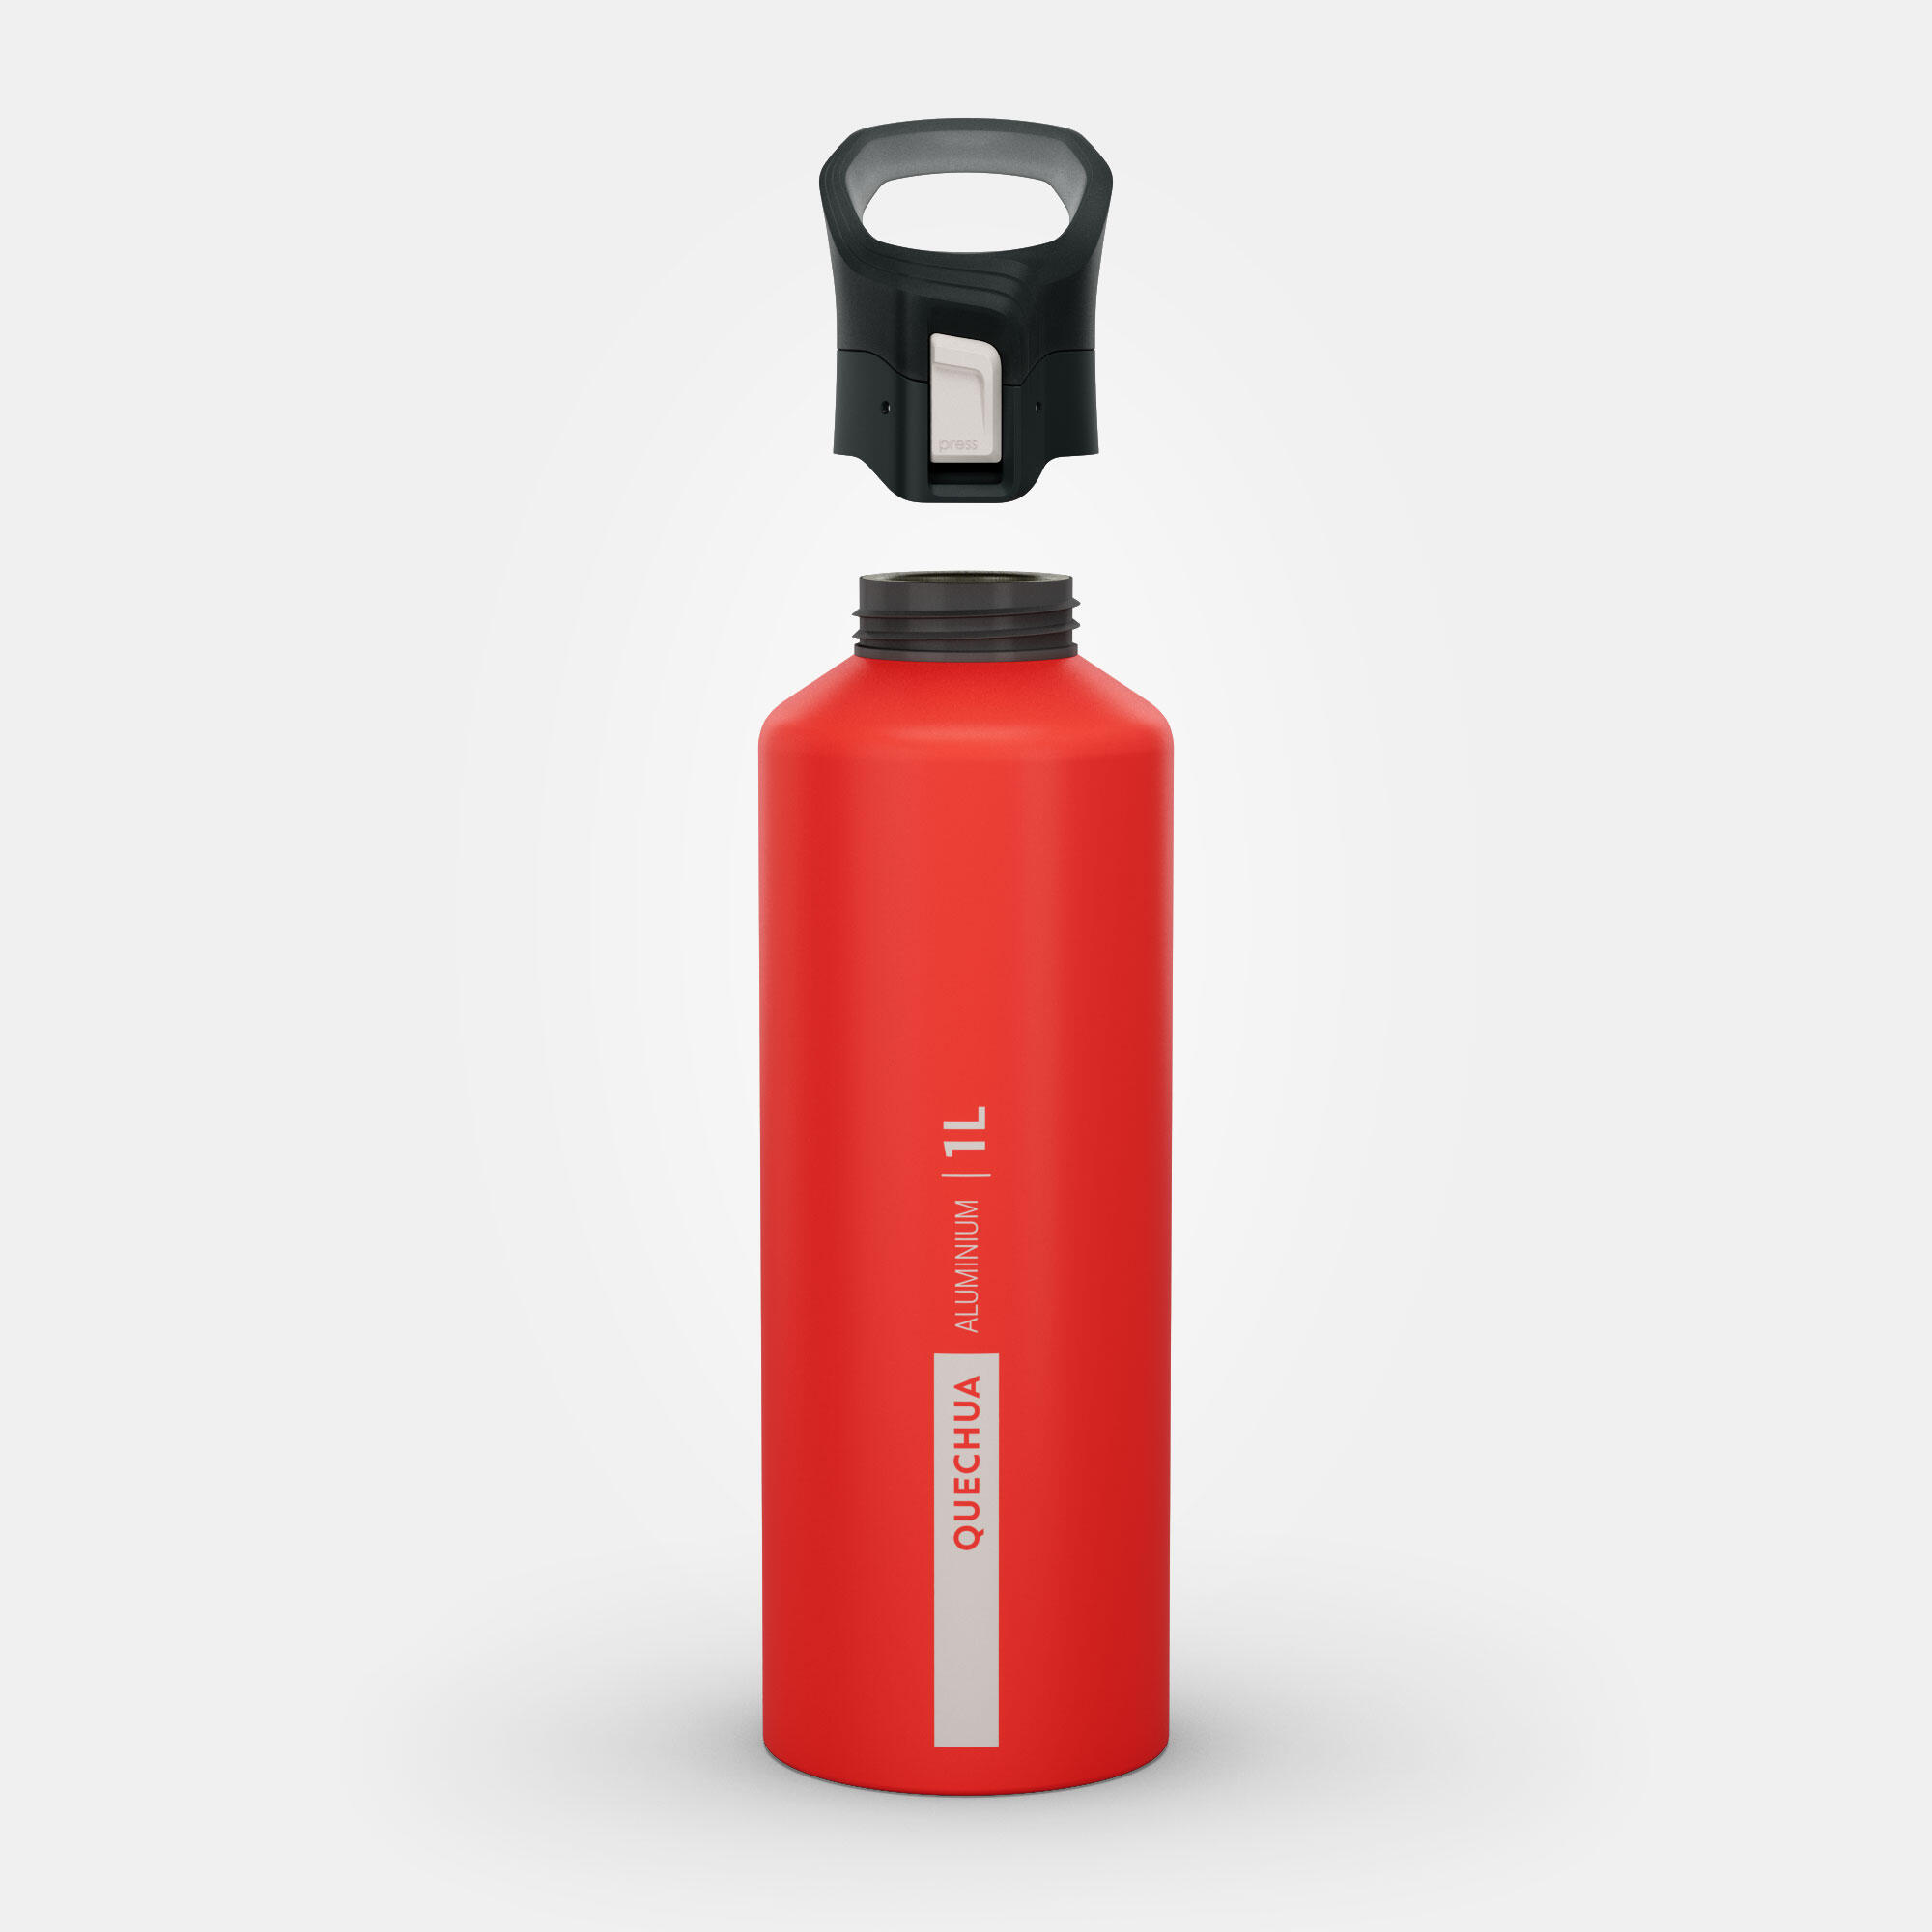 1 L Aluminum Water Bottle - MH 500 - QUECHUA